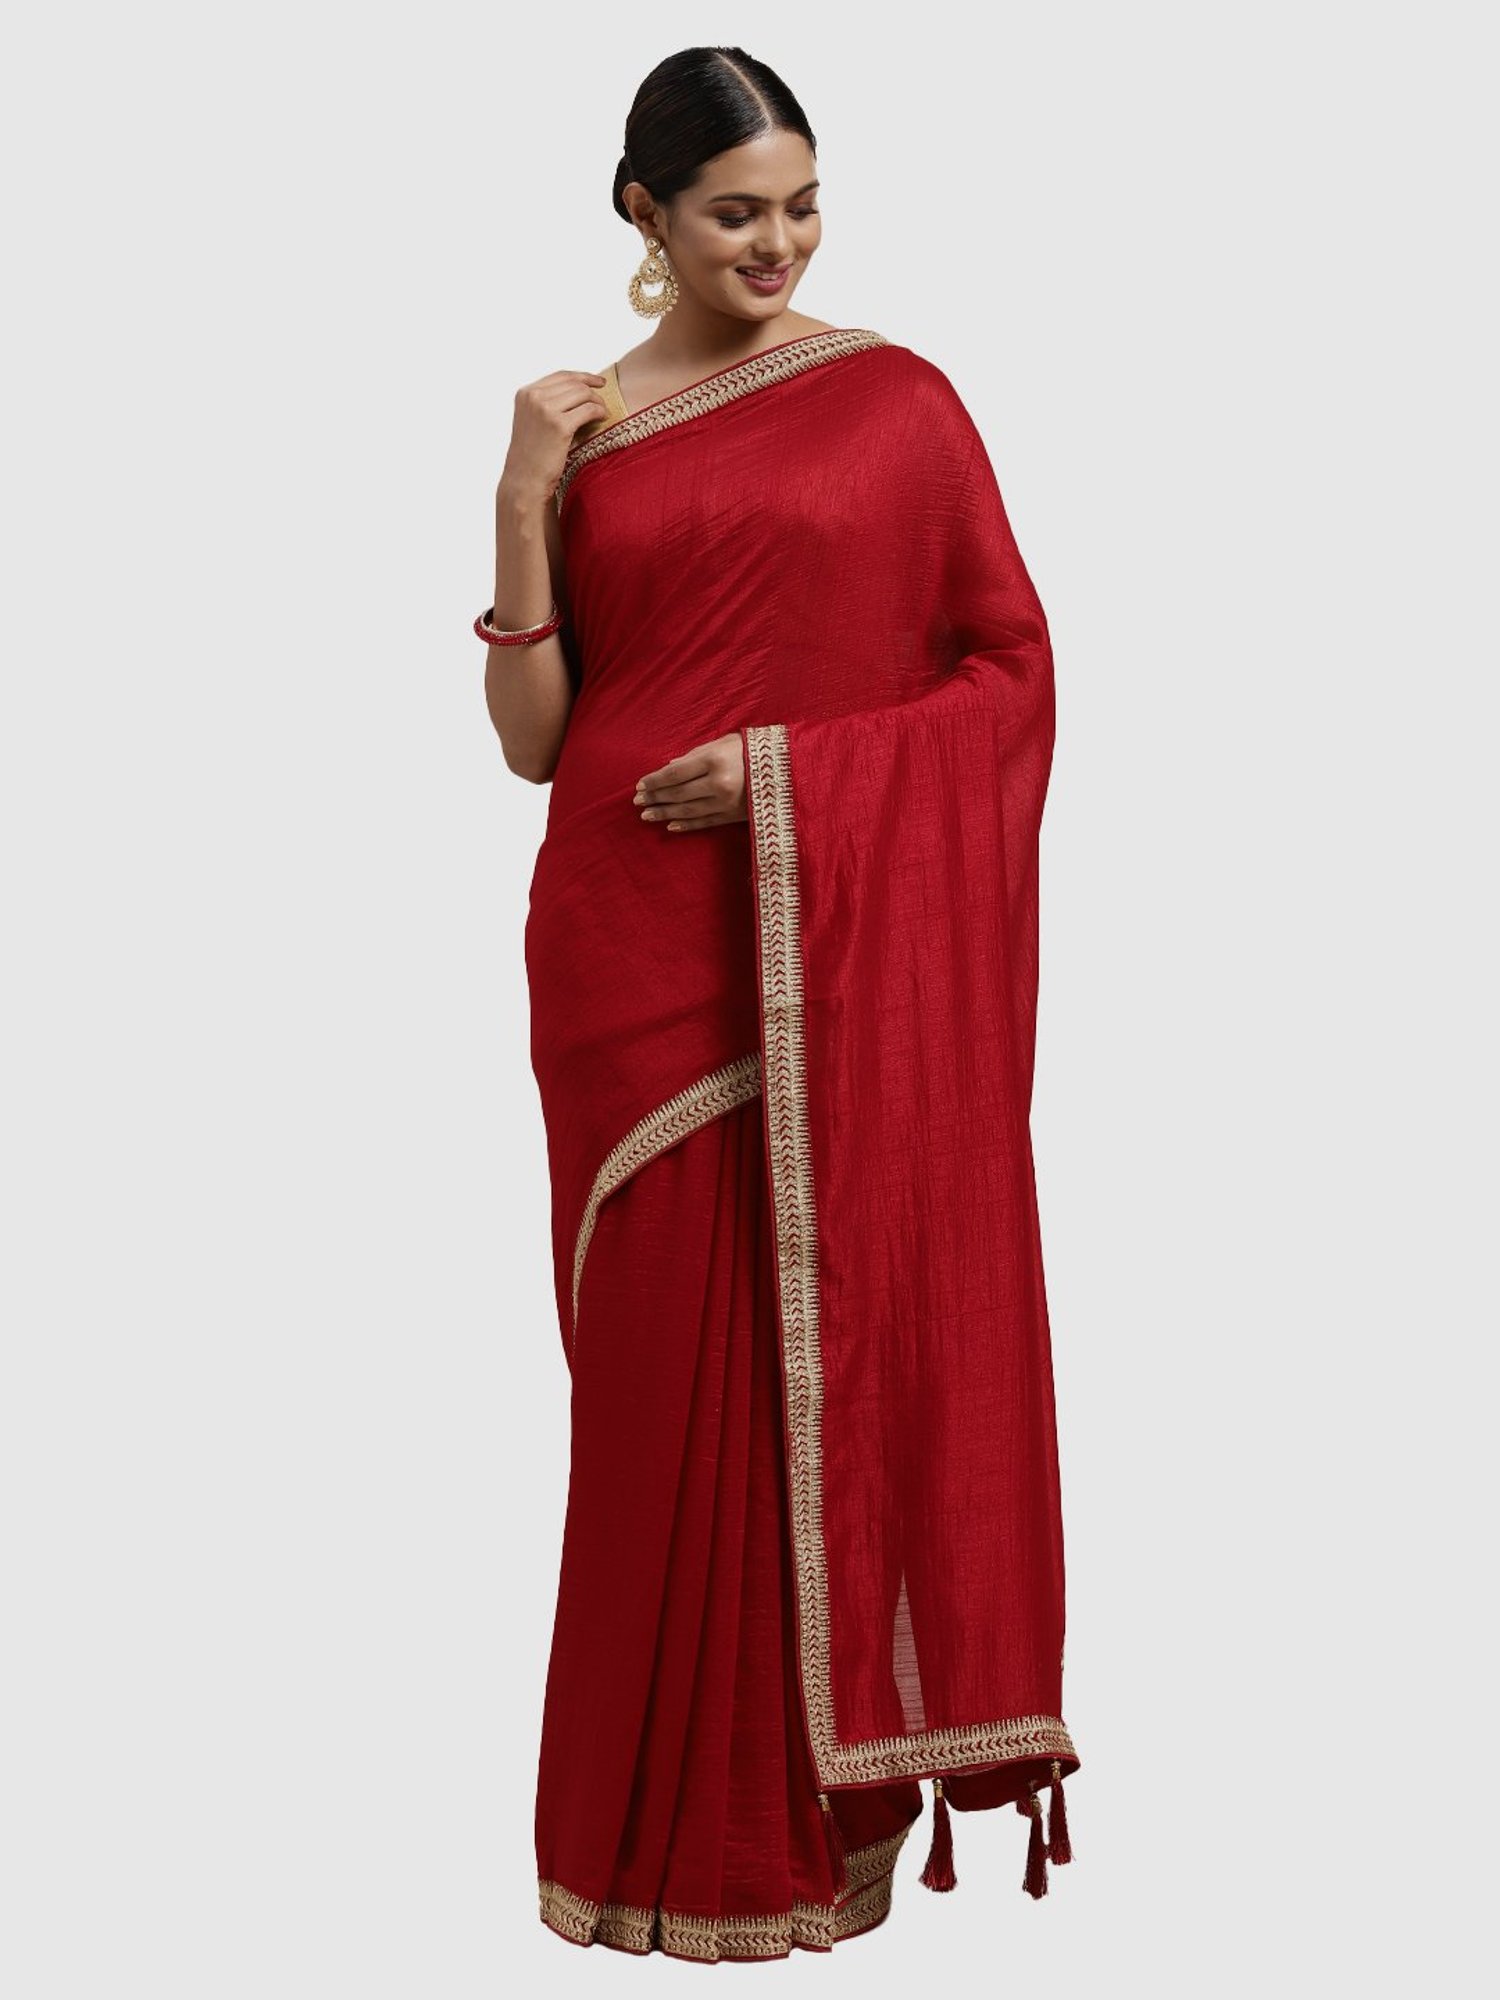 Buy Decadent Dark Red Saree Online in the UK @Mohey - Saree for Women